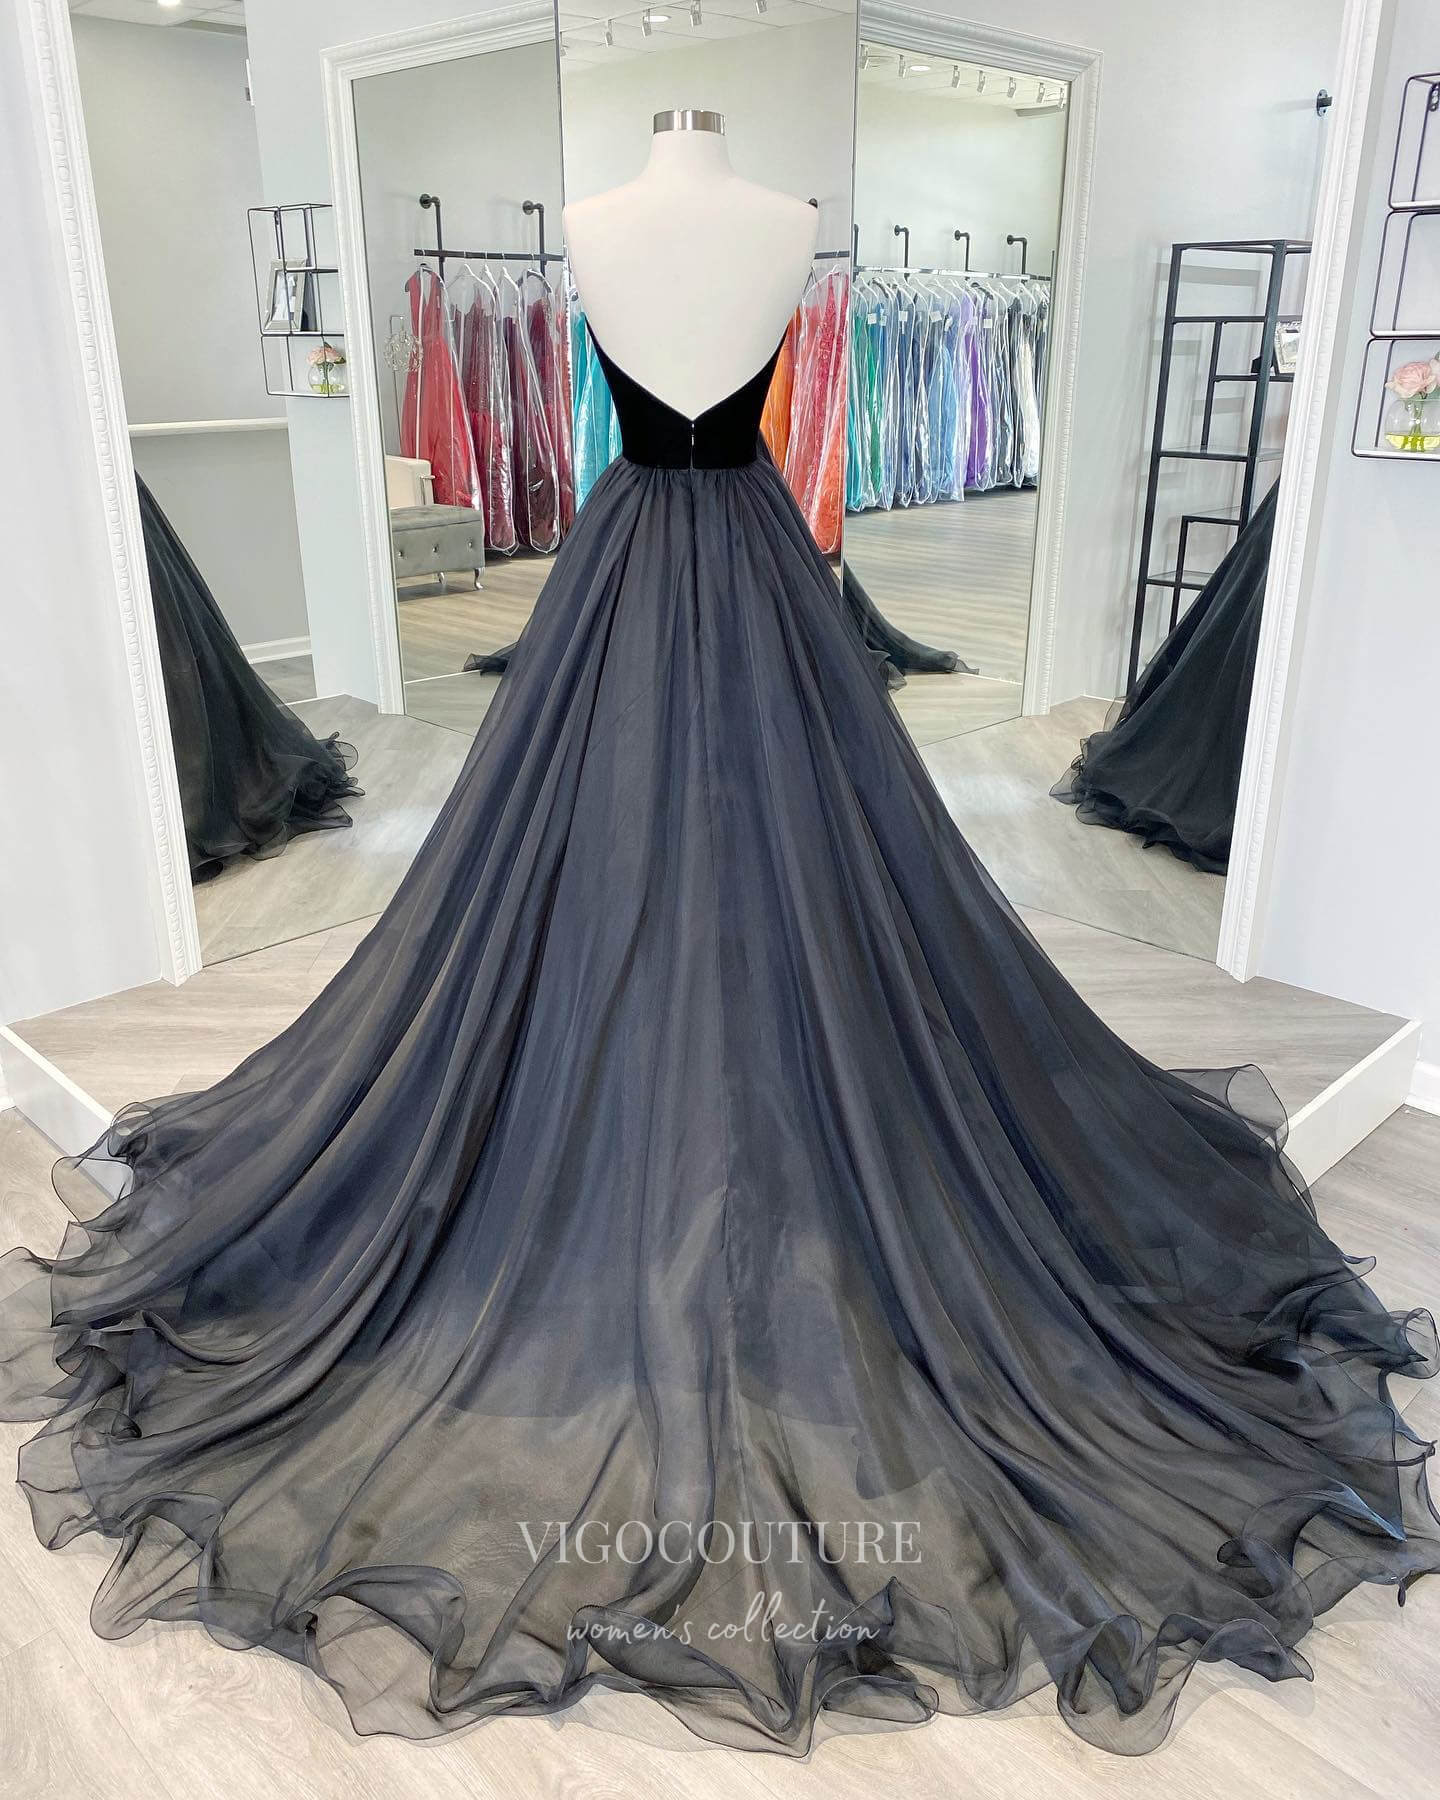 vigocouture-Black Strapless Prom Dresses Organza A-Line Evening Dress 21804-Prom Dresses-vigocouture-